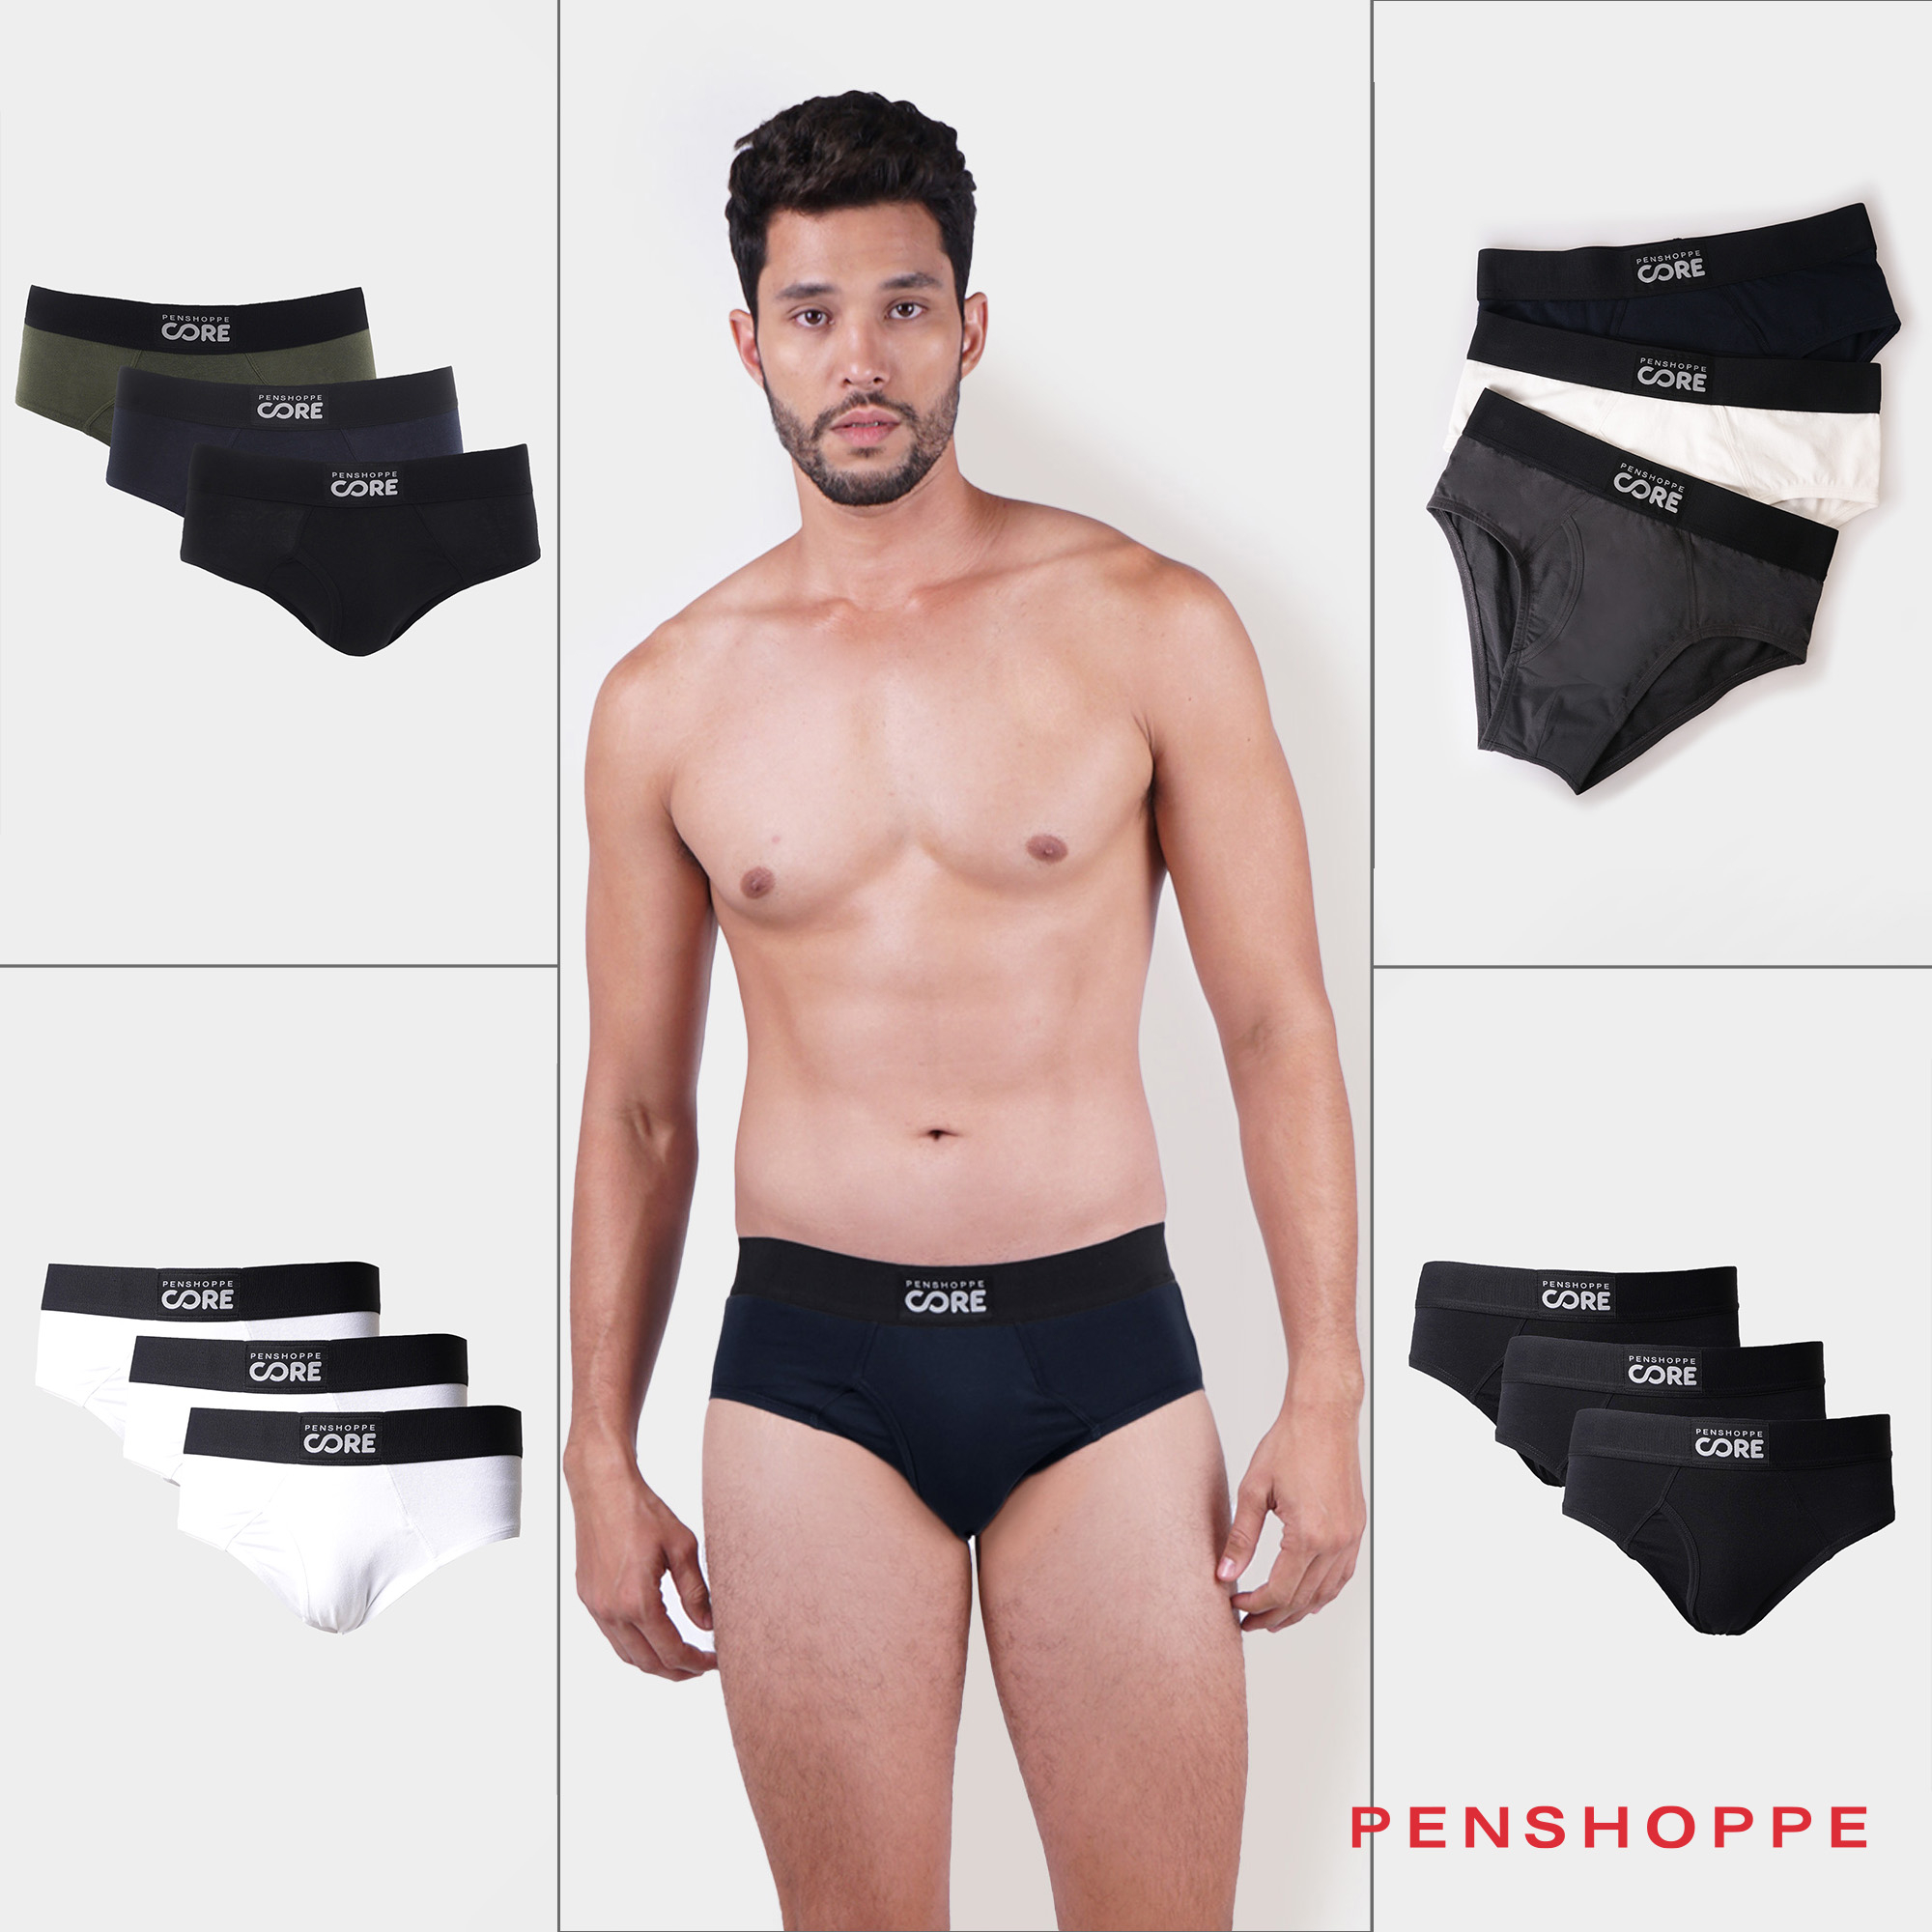 Penshoppe Core 3 in 1 Bundle Classic Briefs Underwear For Men